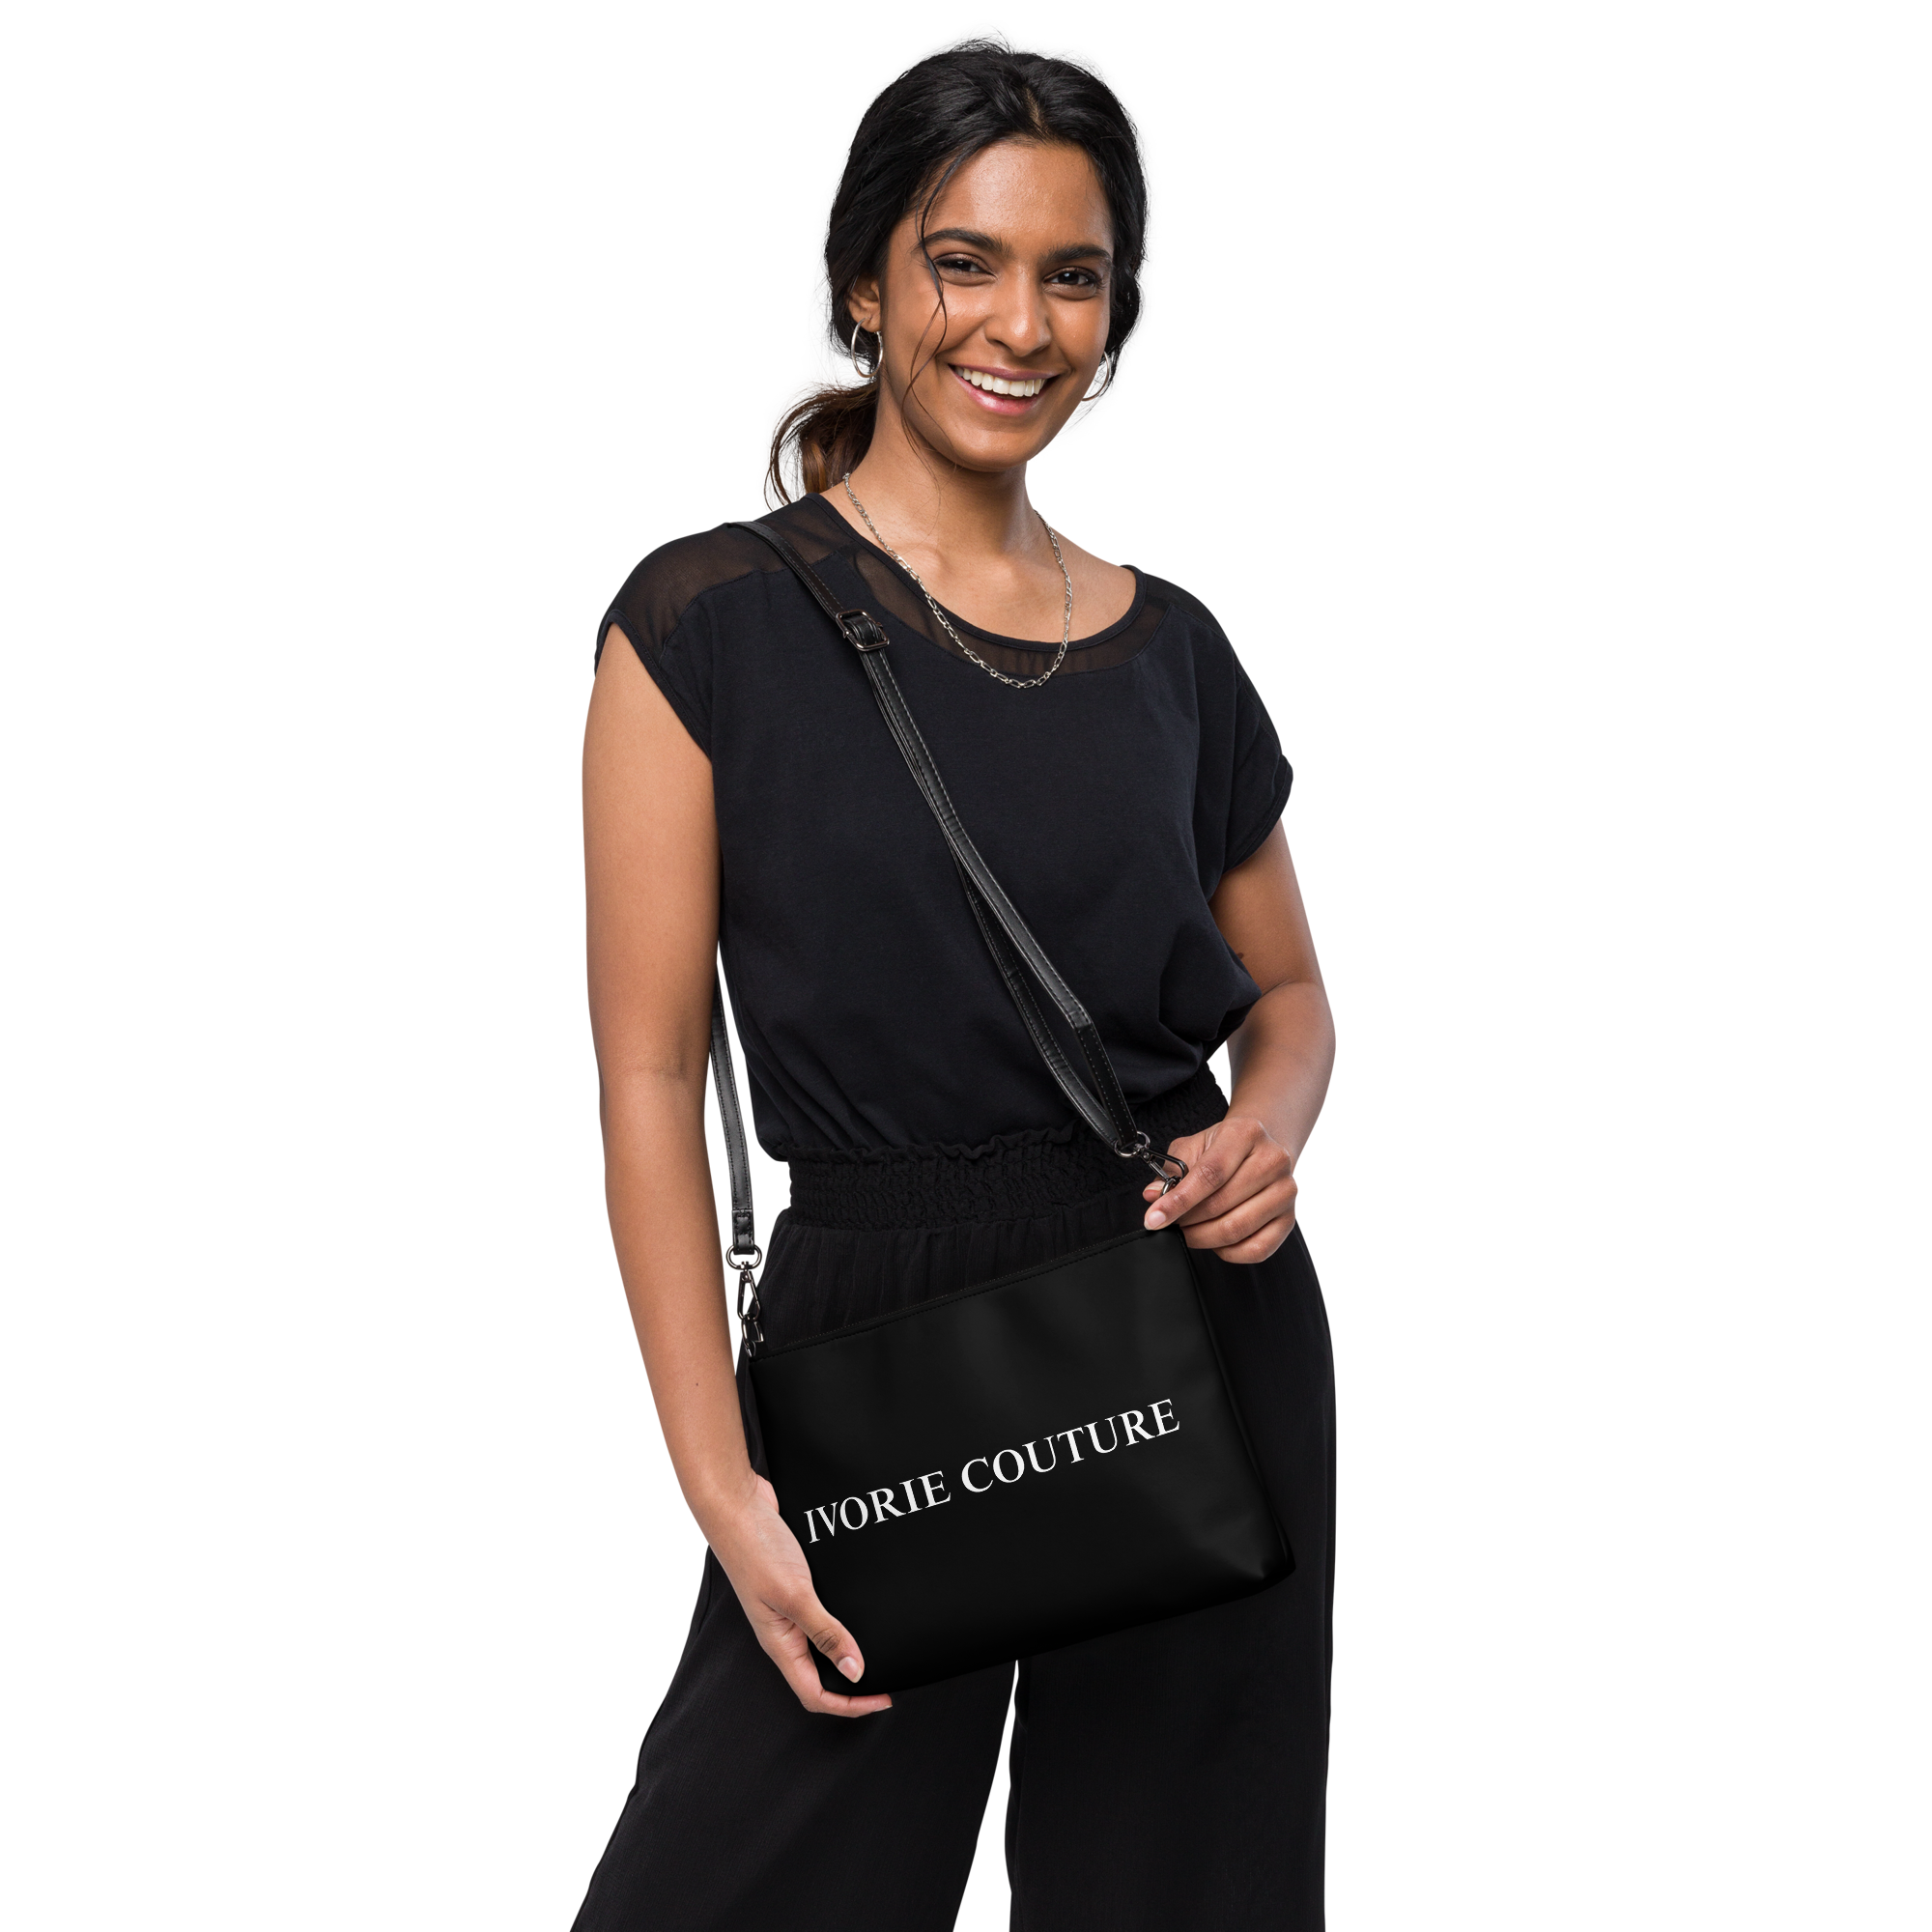 Ivorie Couture Signature Noir Crossbody Handbag Crossbody bag black model happy